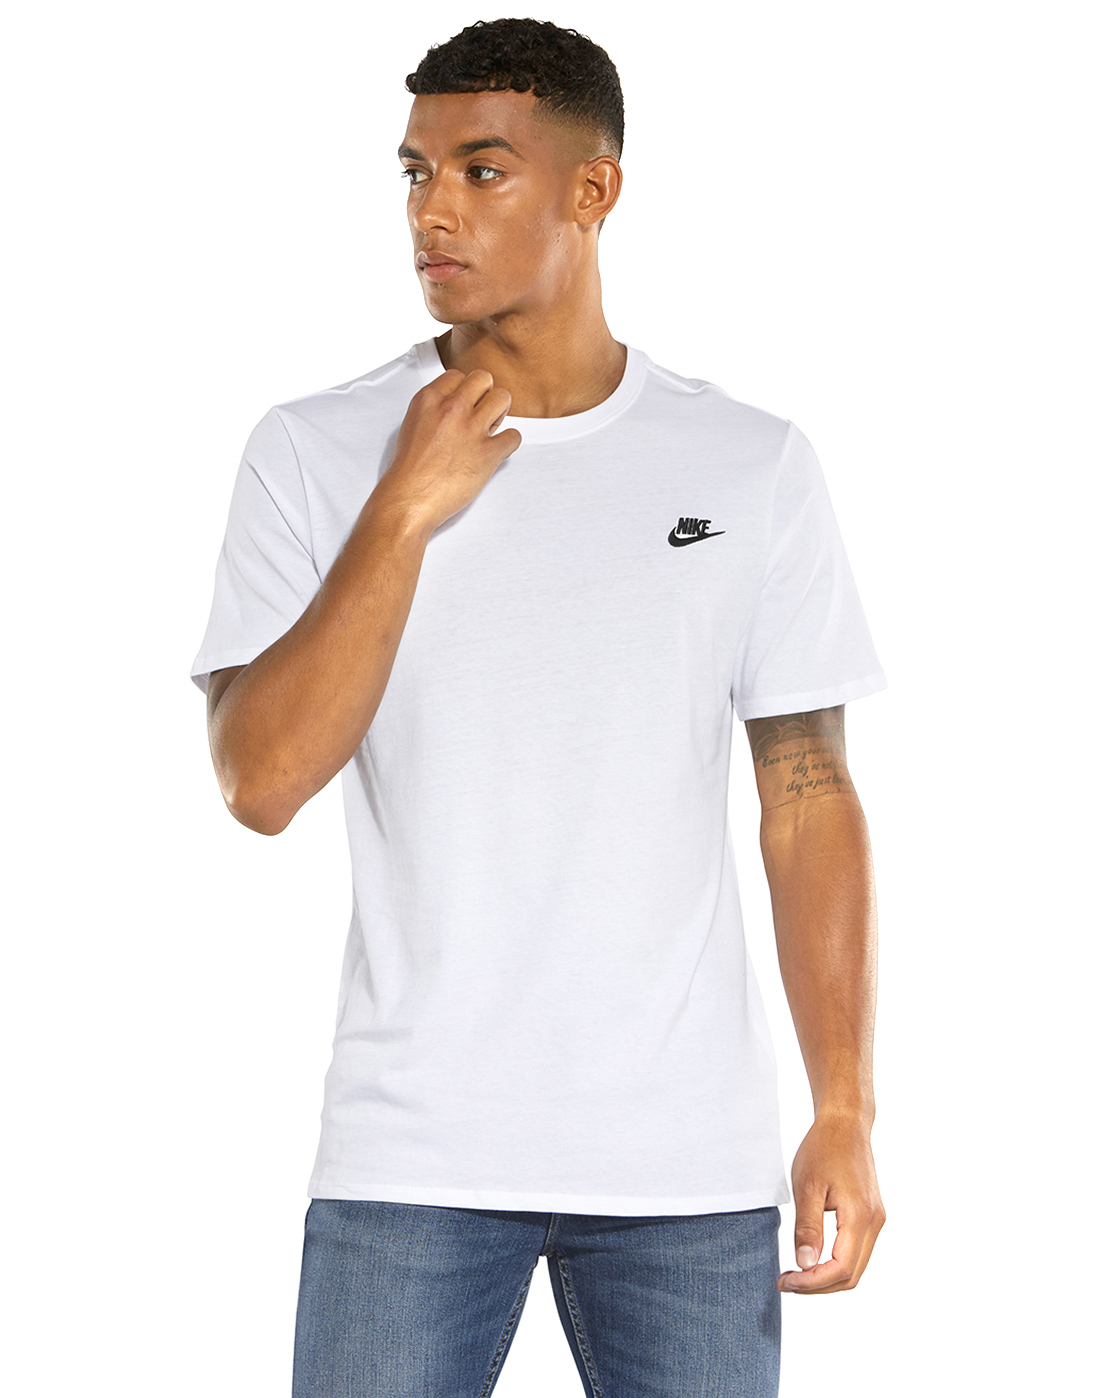 Nike Mens Futura T-Shirt - White | Life Style Sports IE